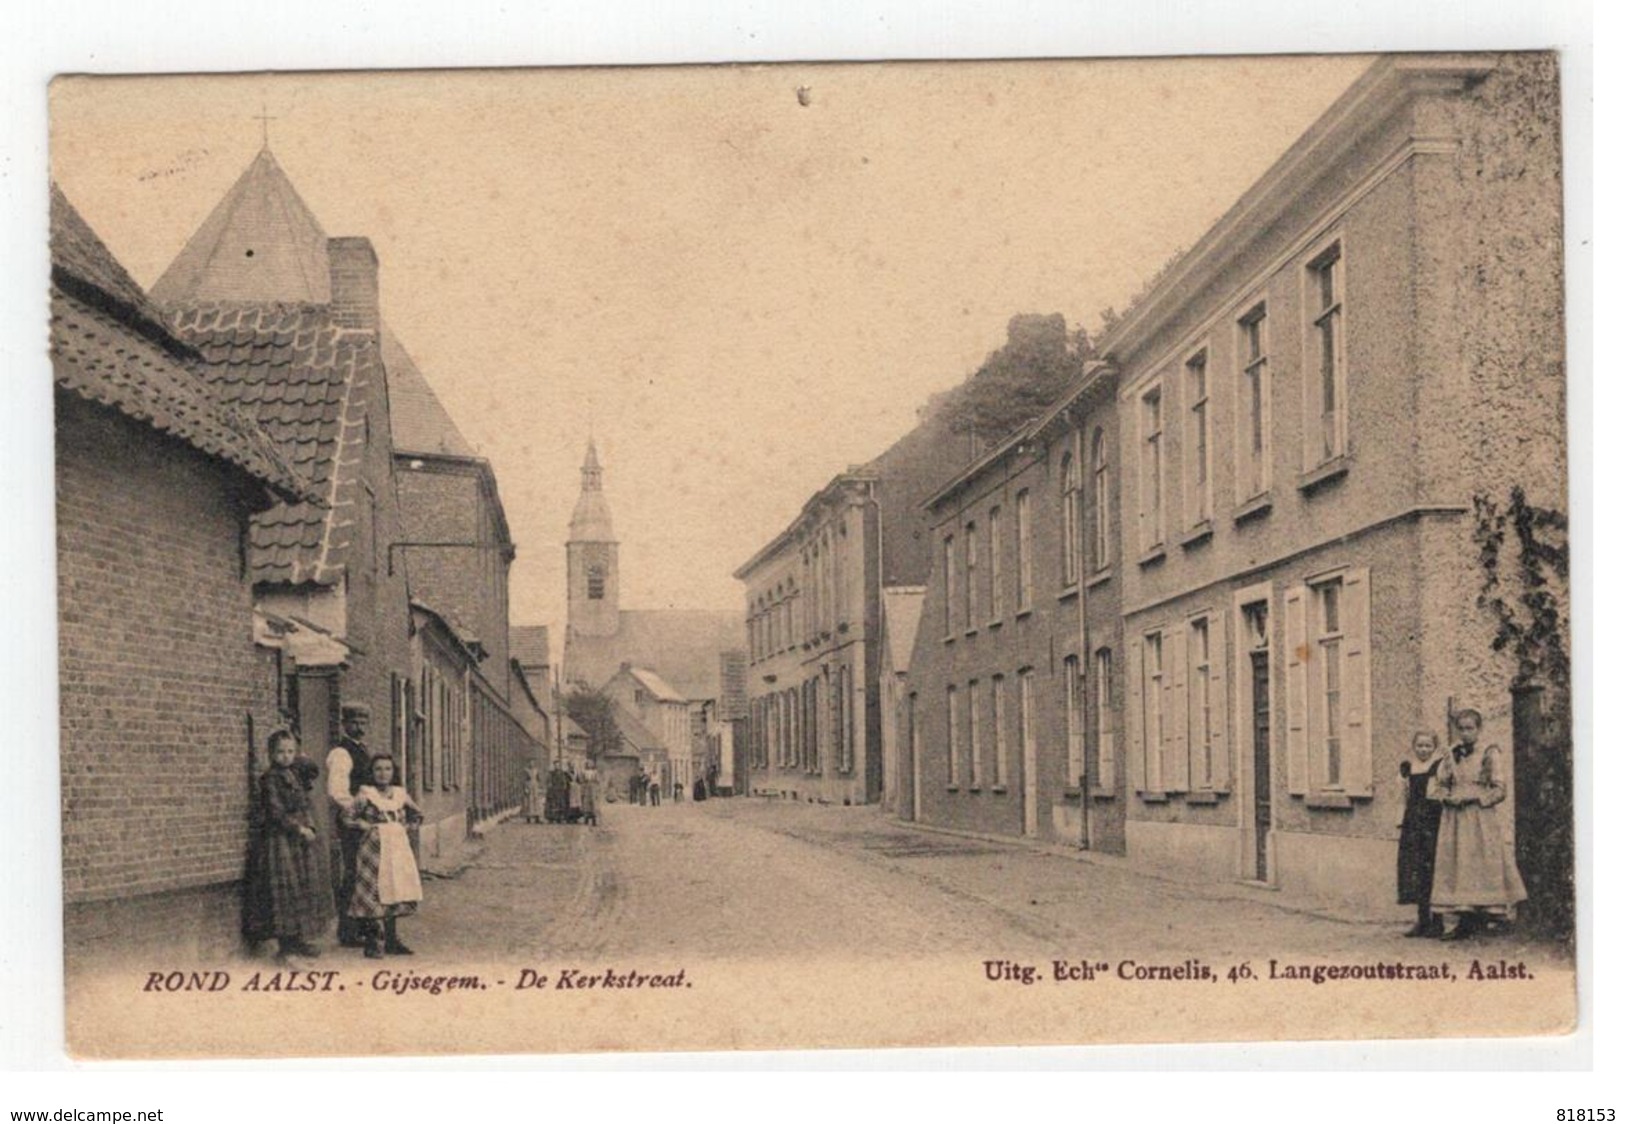 Gijzegem  ROND AALST - Gijsegem - De Kerkstraat 1909 - Aalst